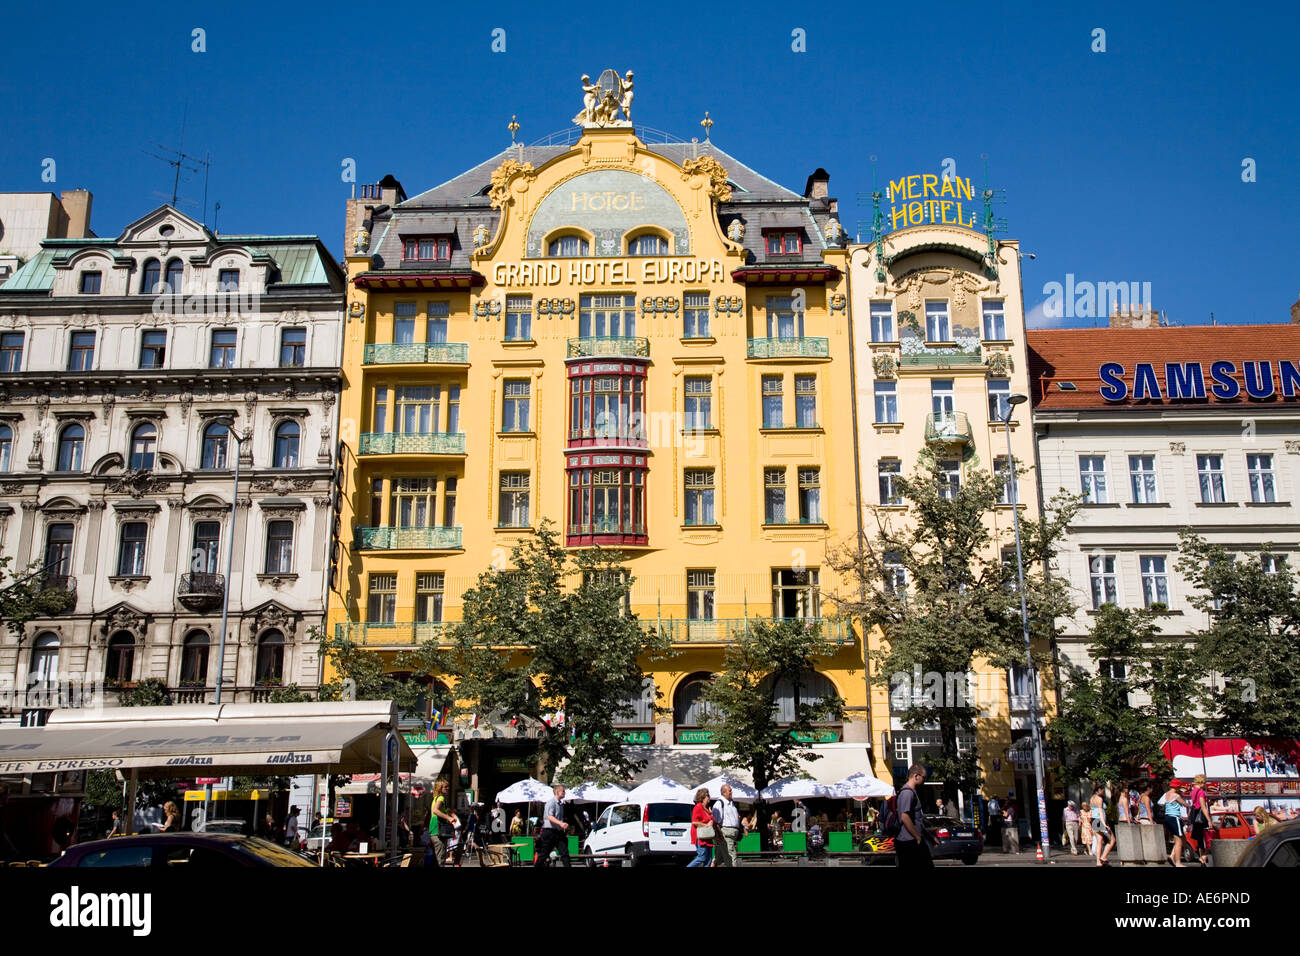 Cafe Tramvaj and Grand Hotel Europa on Wenceslas Square, Prague Stock Photo